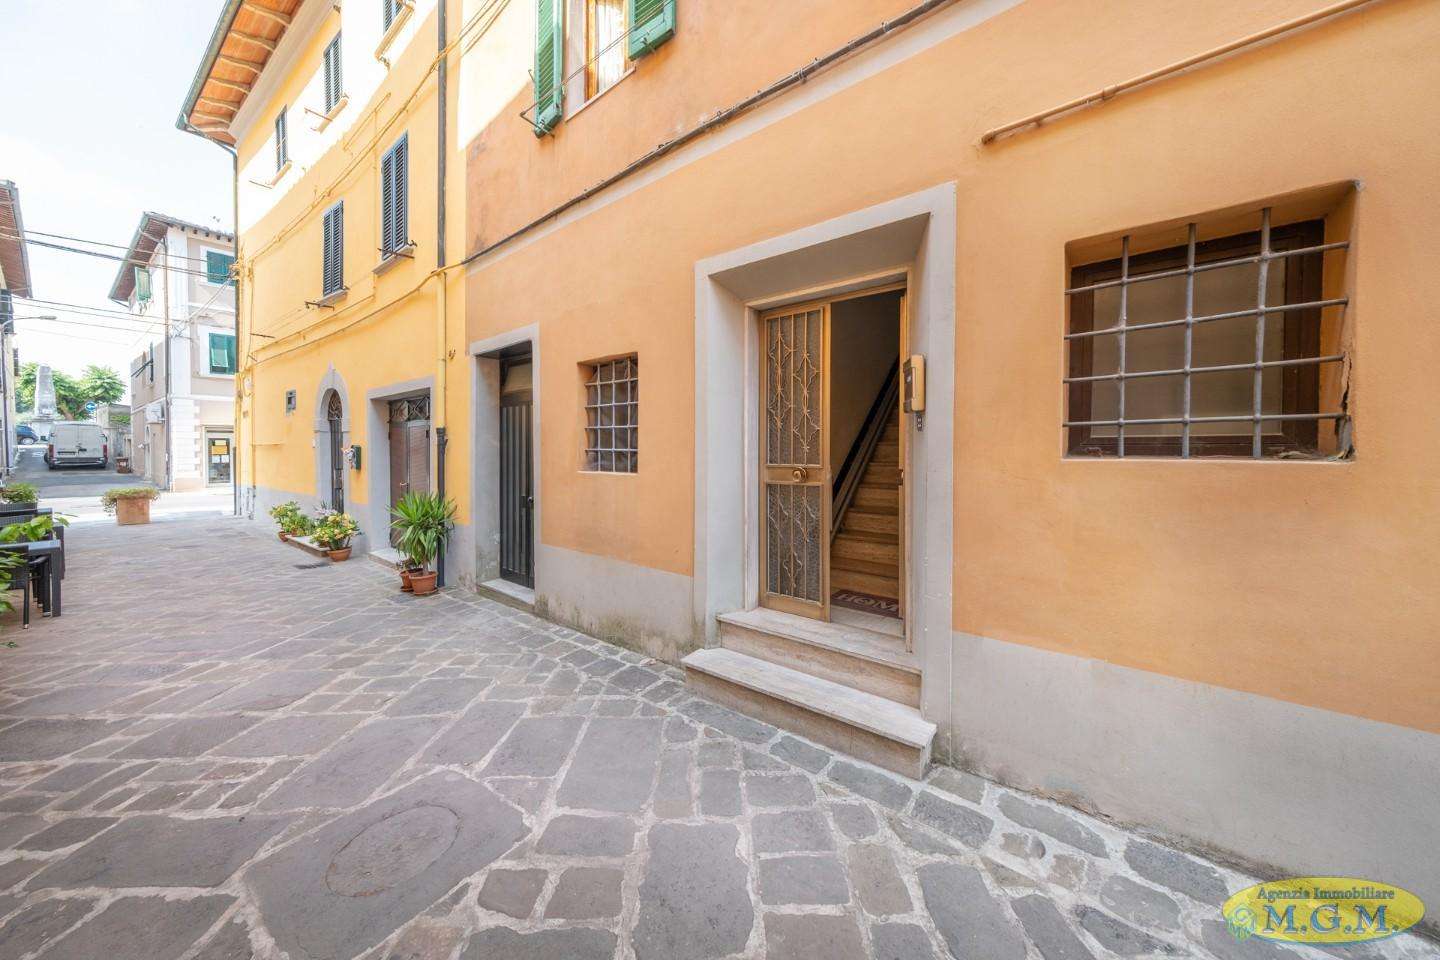 Palazzo - Stabile in Vendita a Calcinaia Piazza Daniele Manin,